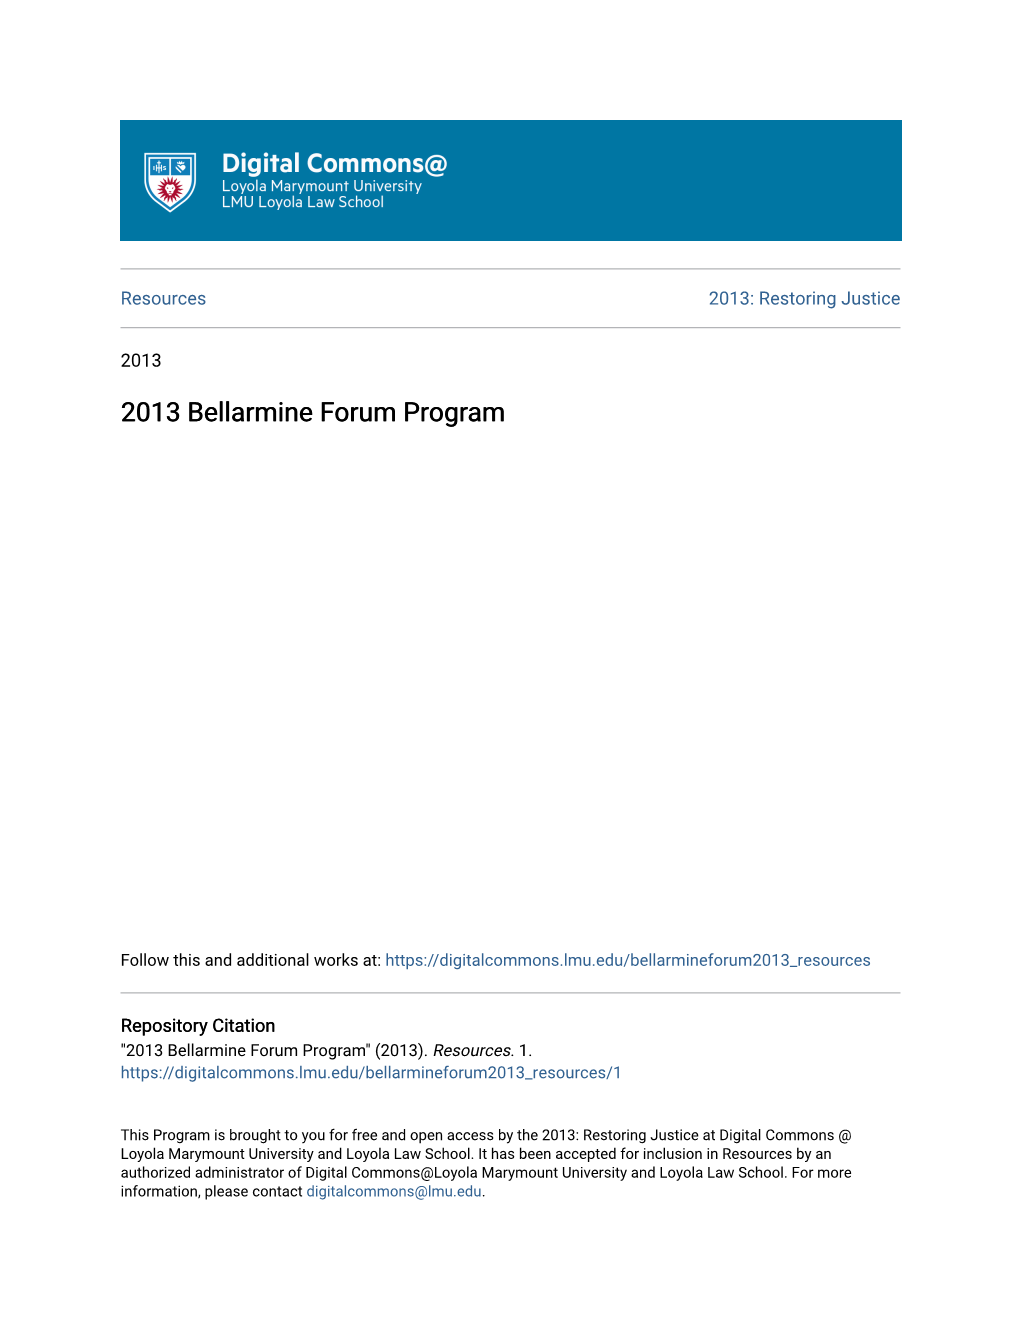 2013 Bellarmine Forum Program